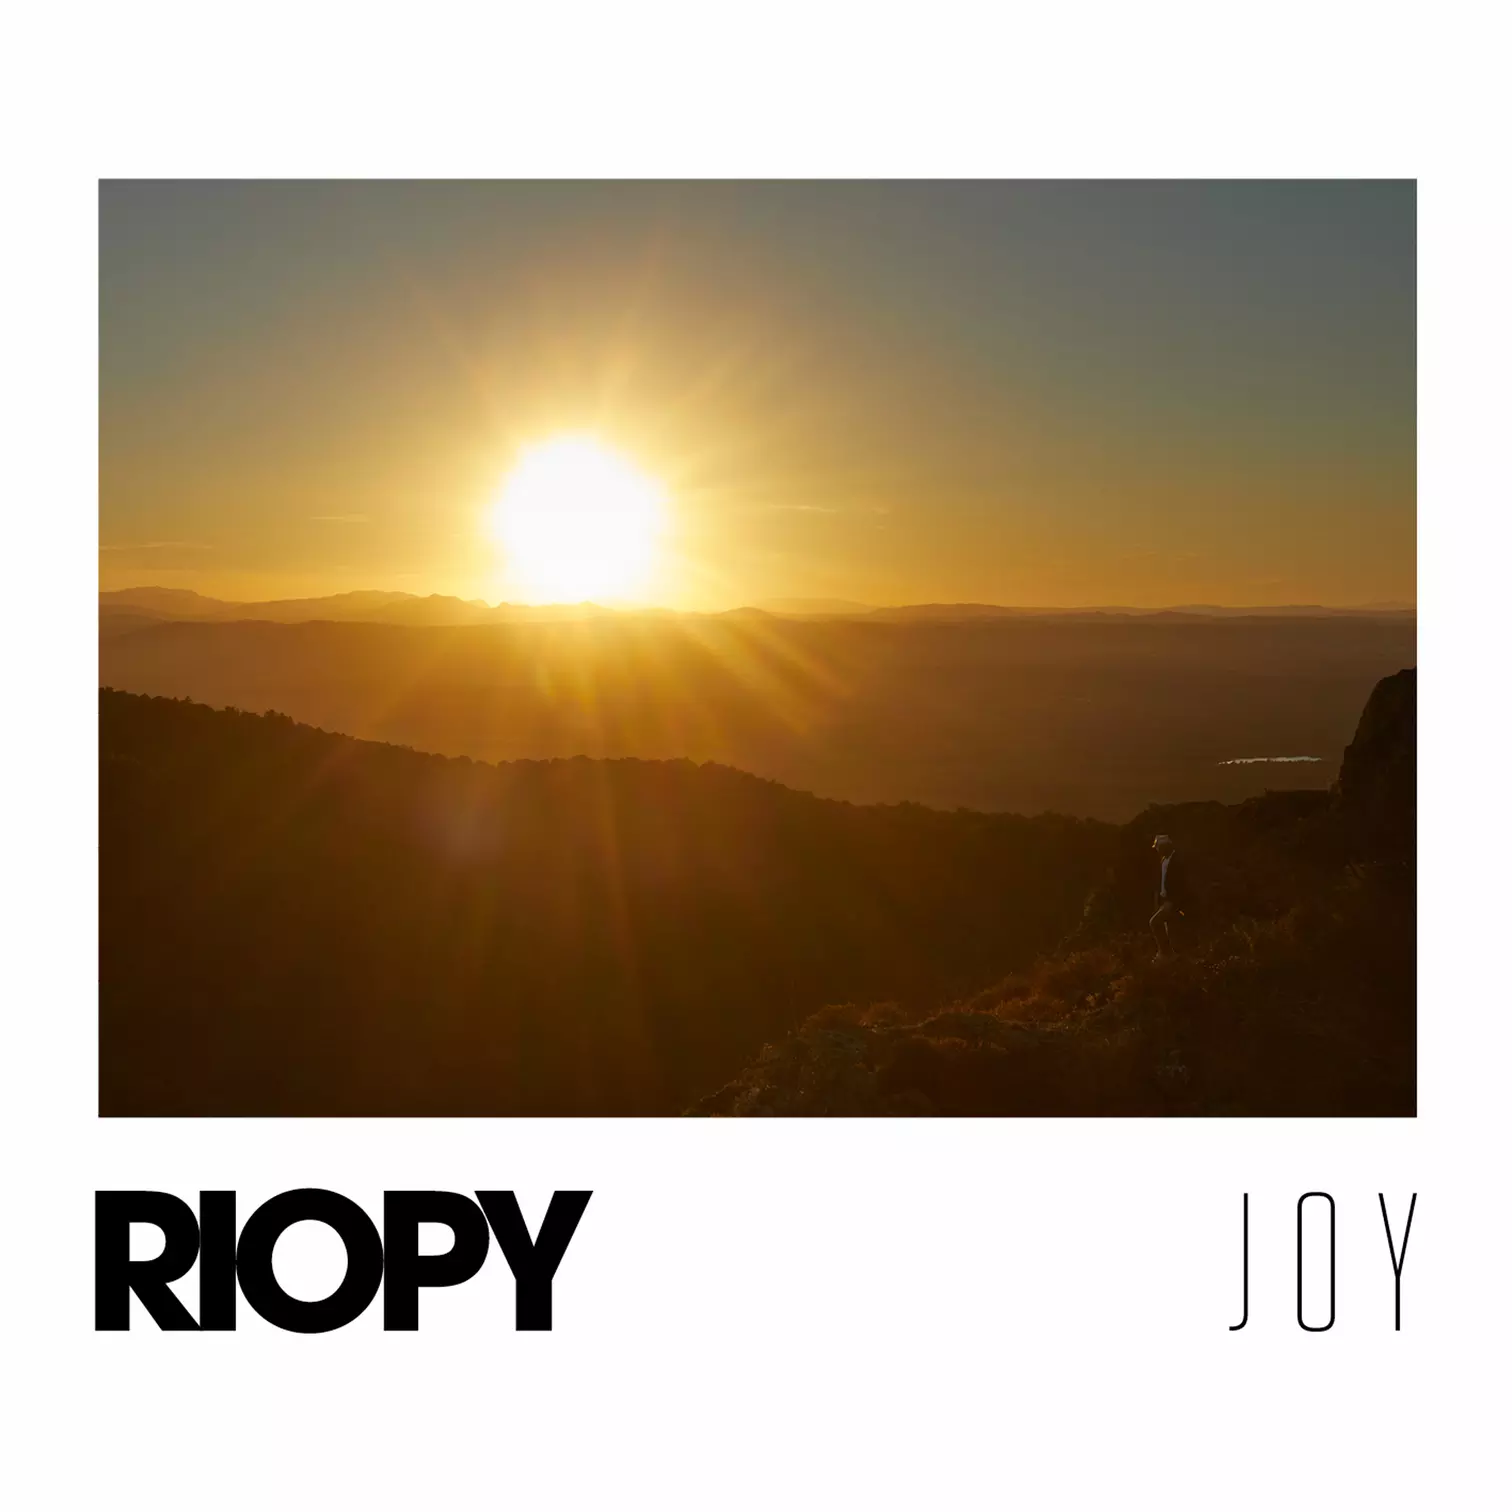 RIOPY Joy